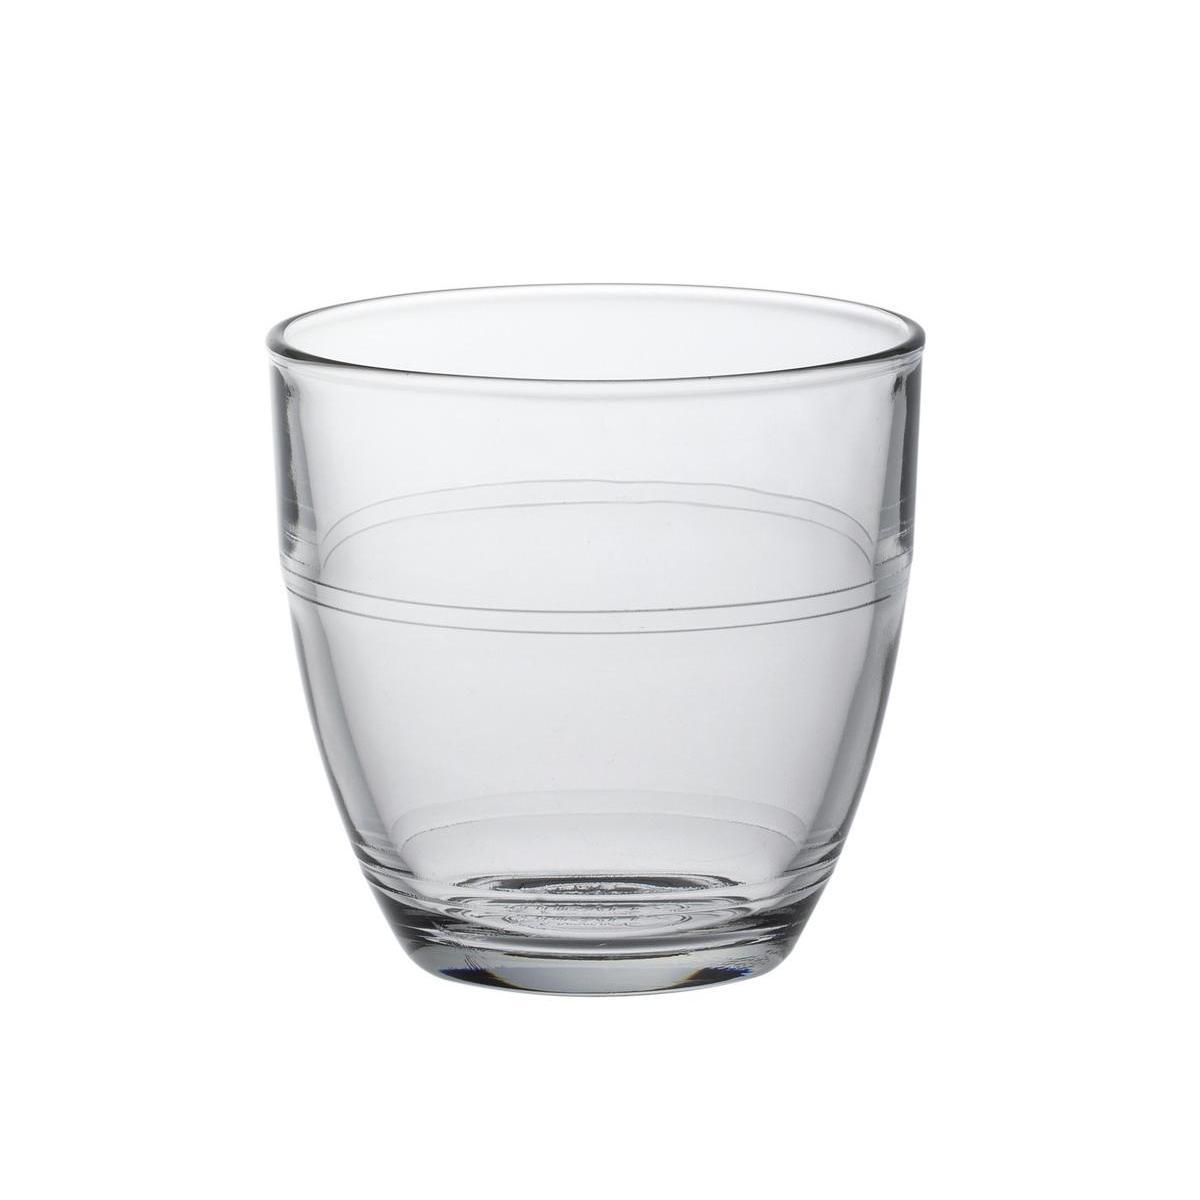 Lot de 4 gobelets Gigogne en verre - 16 cl - Blanc transparent